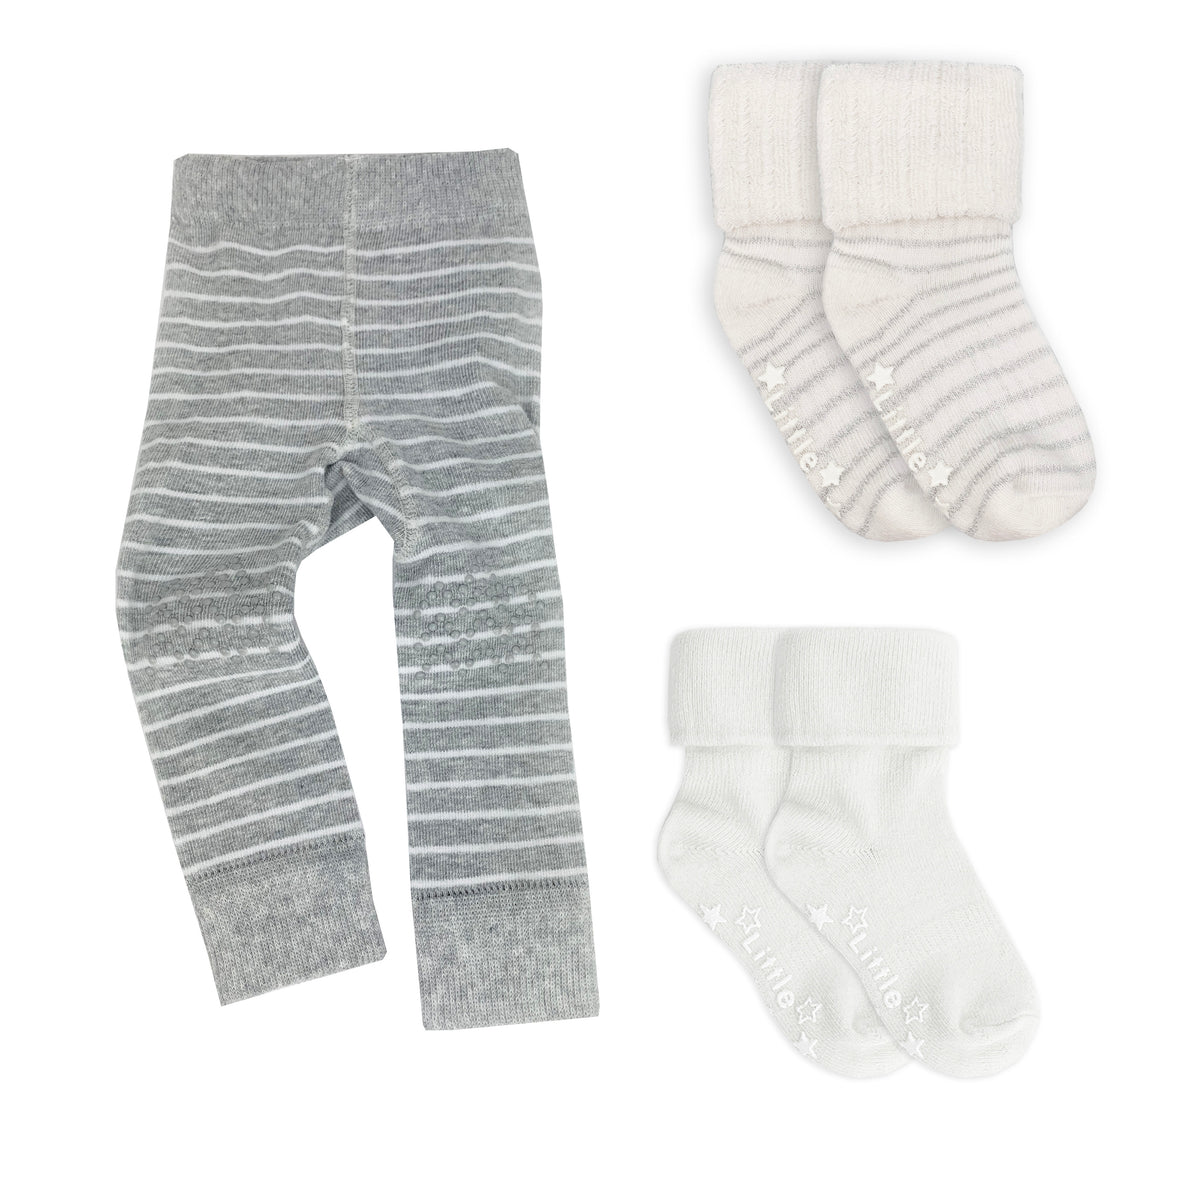 Leggings & Socks Super Set - Grey